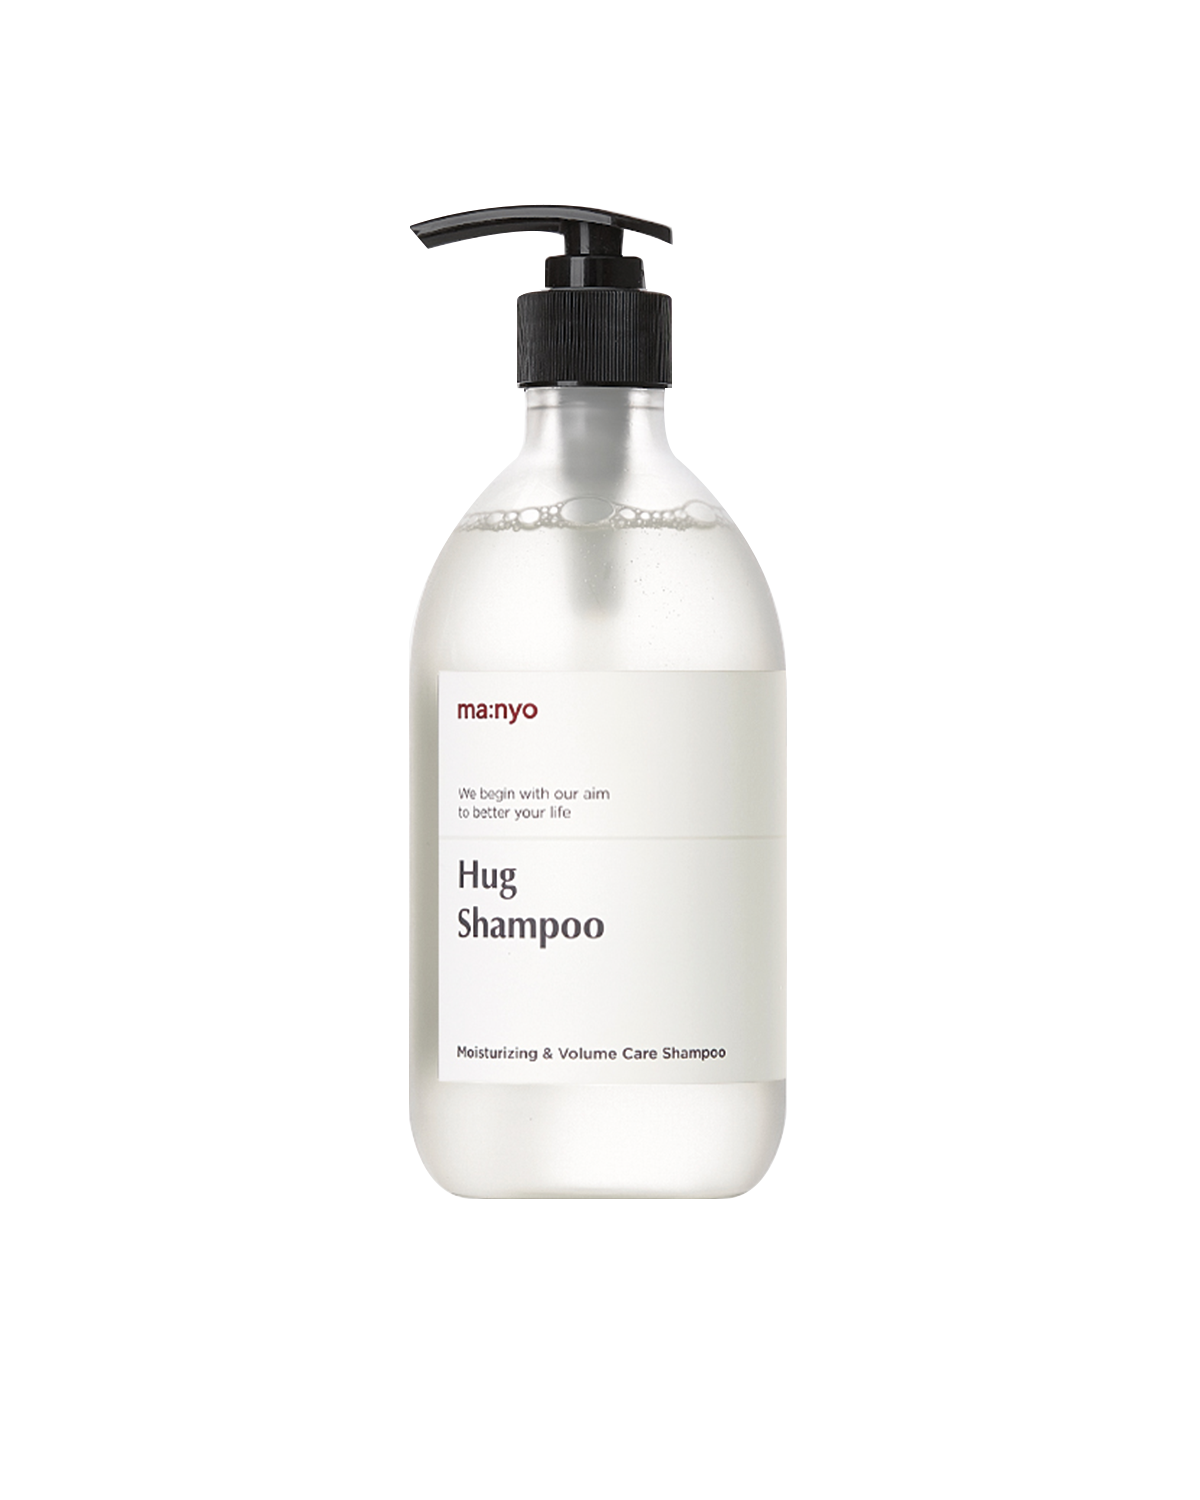 MANYO FACTORY HUG Moisturizing Hair Shampoo 510 ml